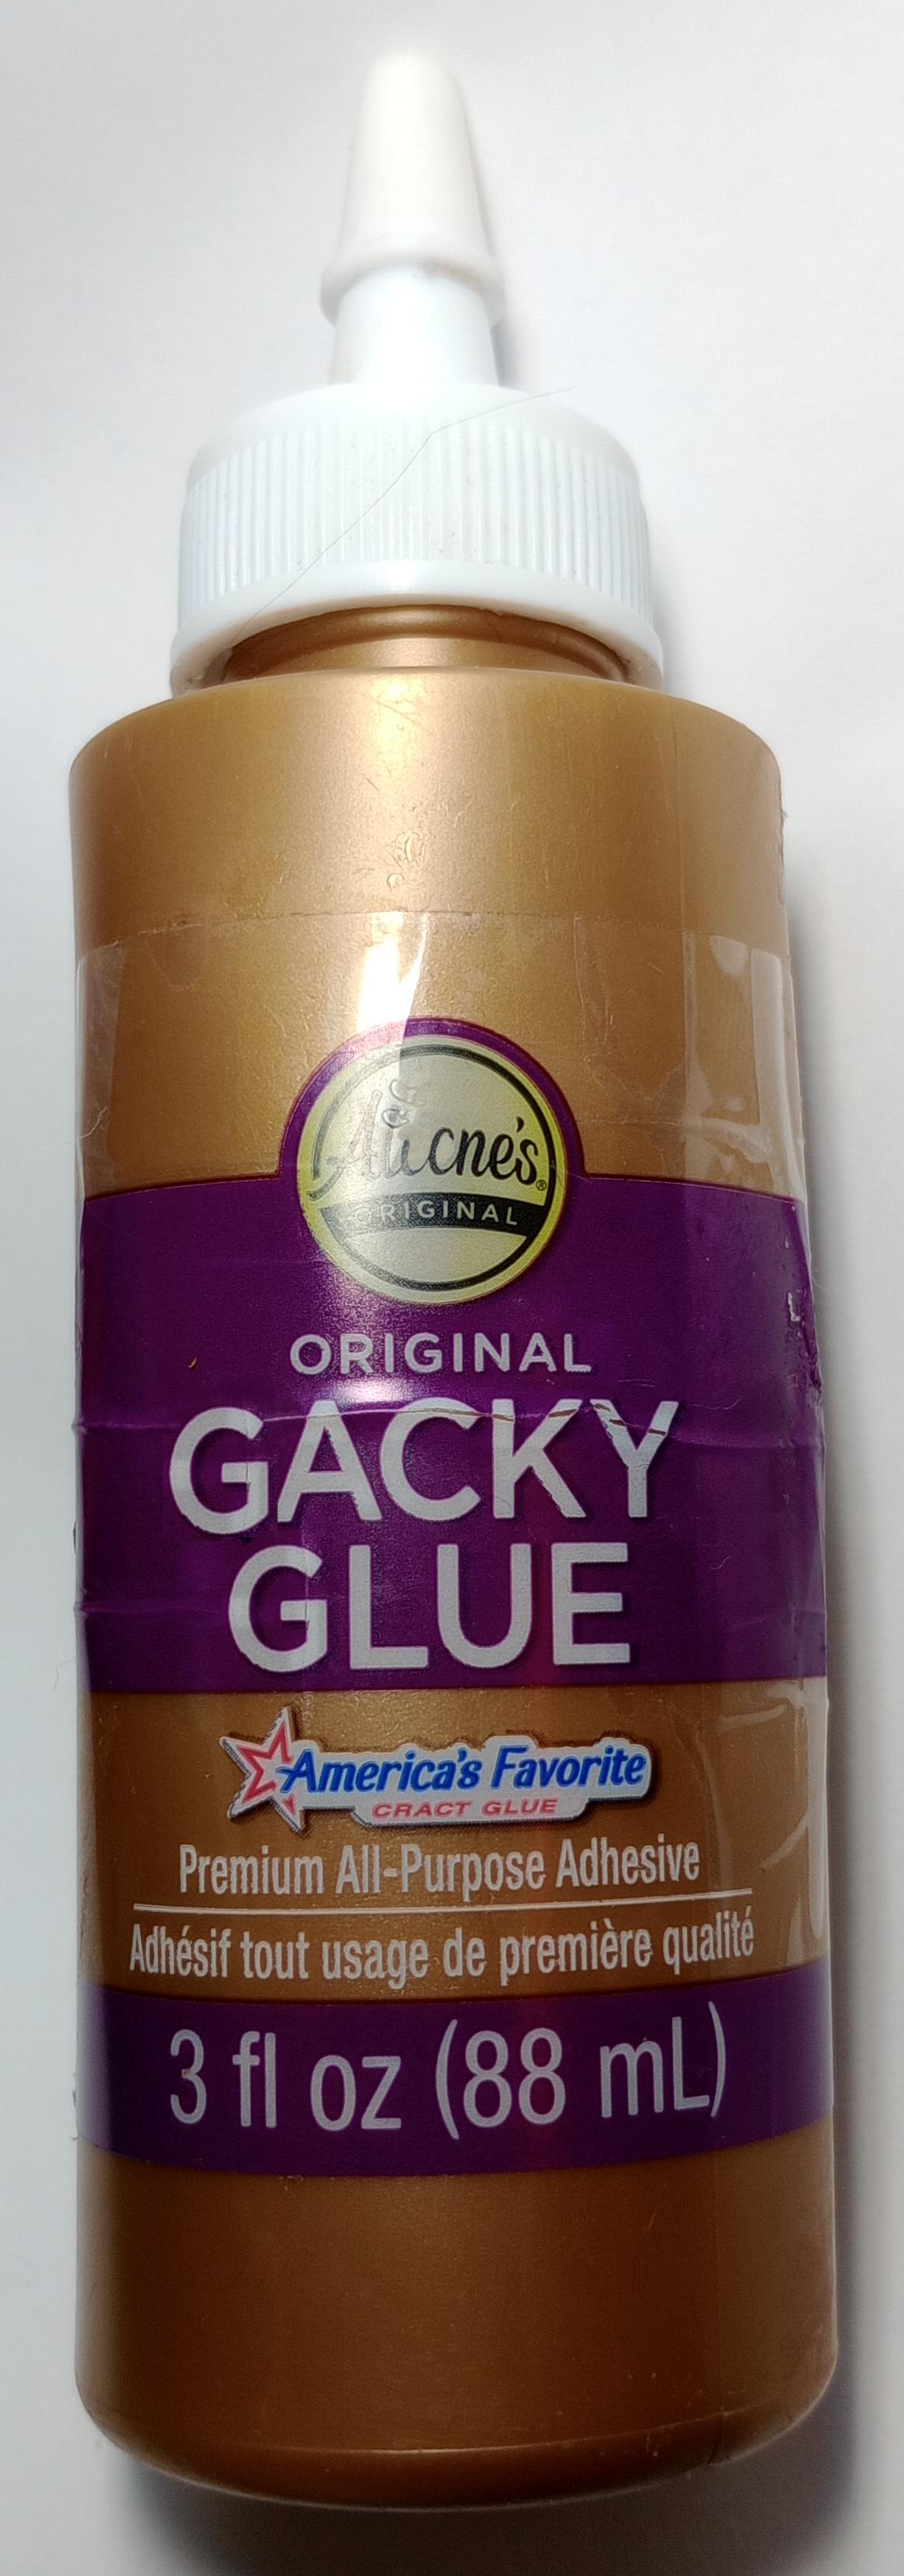 Gacky Glue.jpg